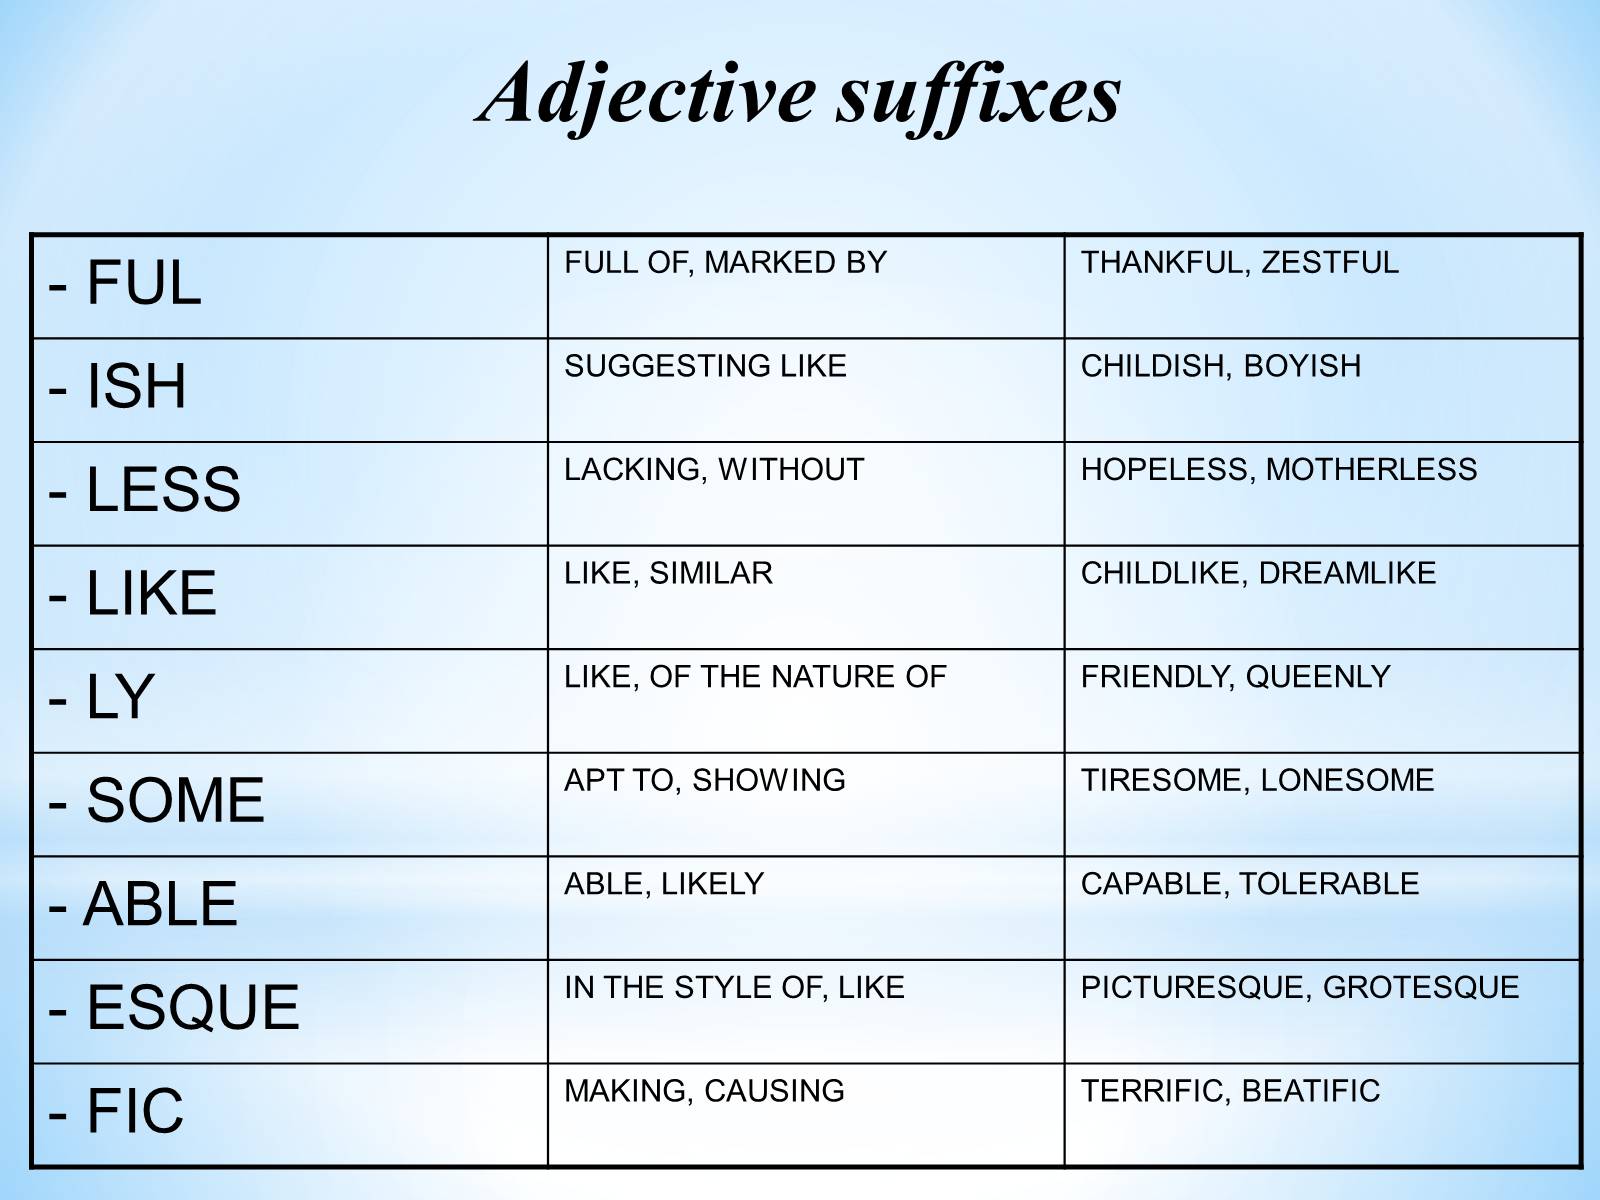 Фулл на английском. Adjectives суффиксы. Суффиксы в английском. Adjective suffixes в английском языке. Ful суффикс в английском.